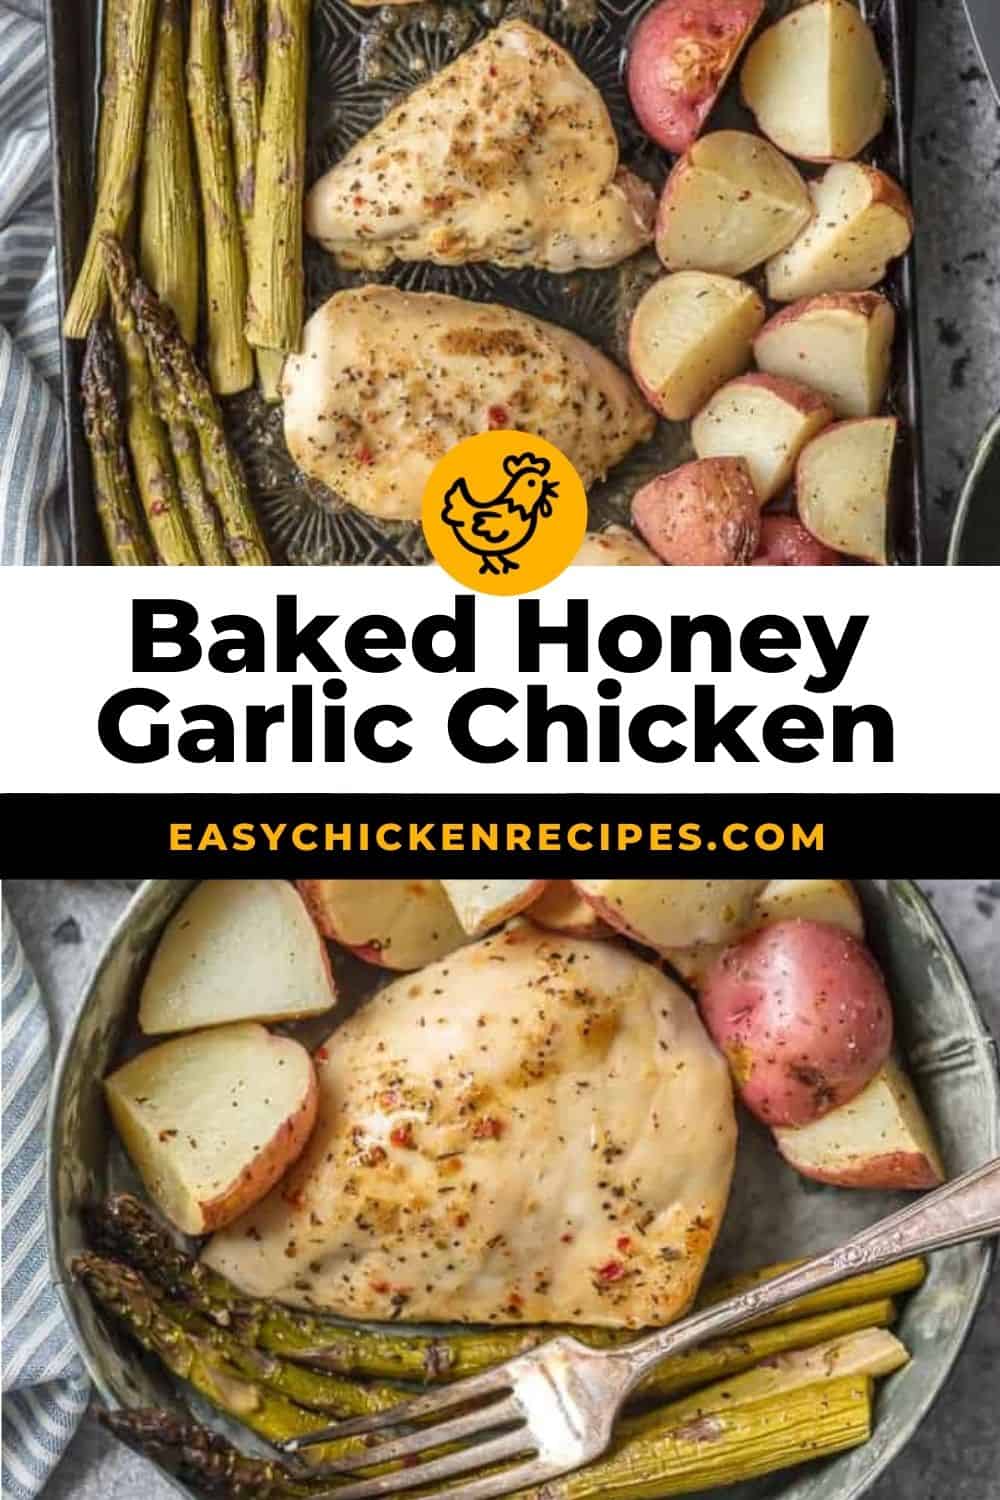 Baked Honey Garlic Chicken and Veggies - Easy Chicken Recipes